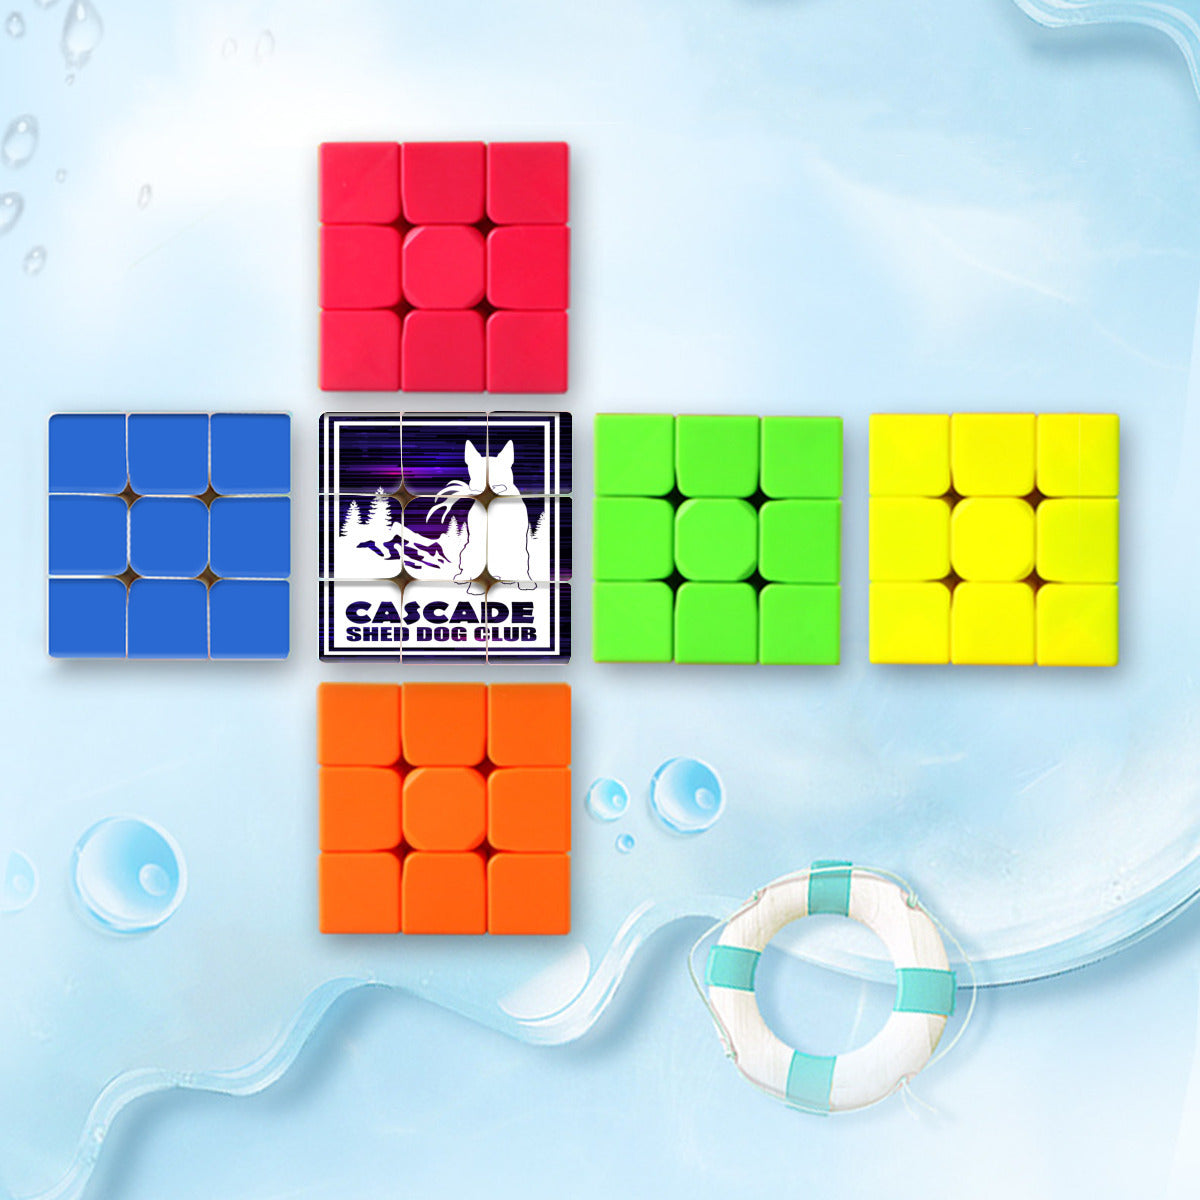 Rubik's Cube   CUSTOM cascade shed dog